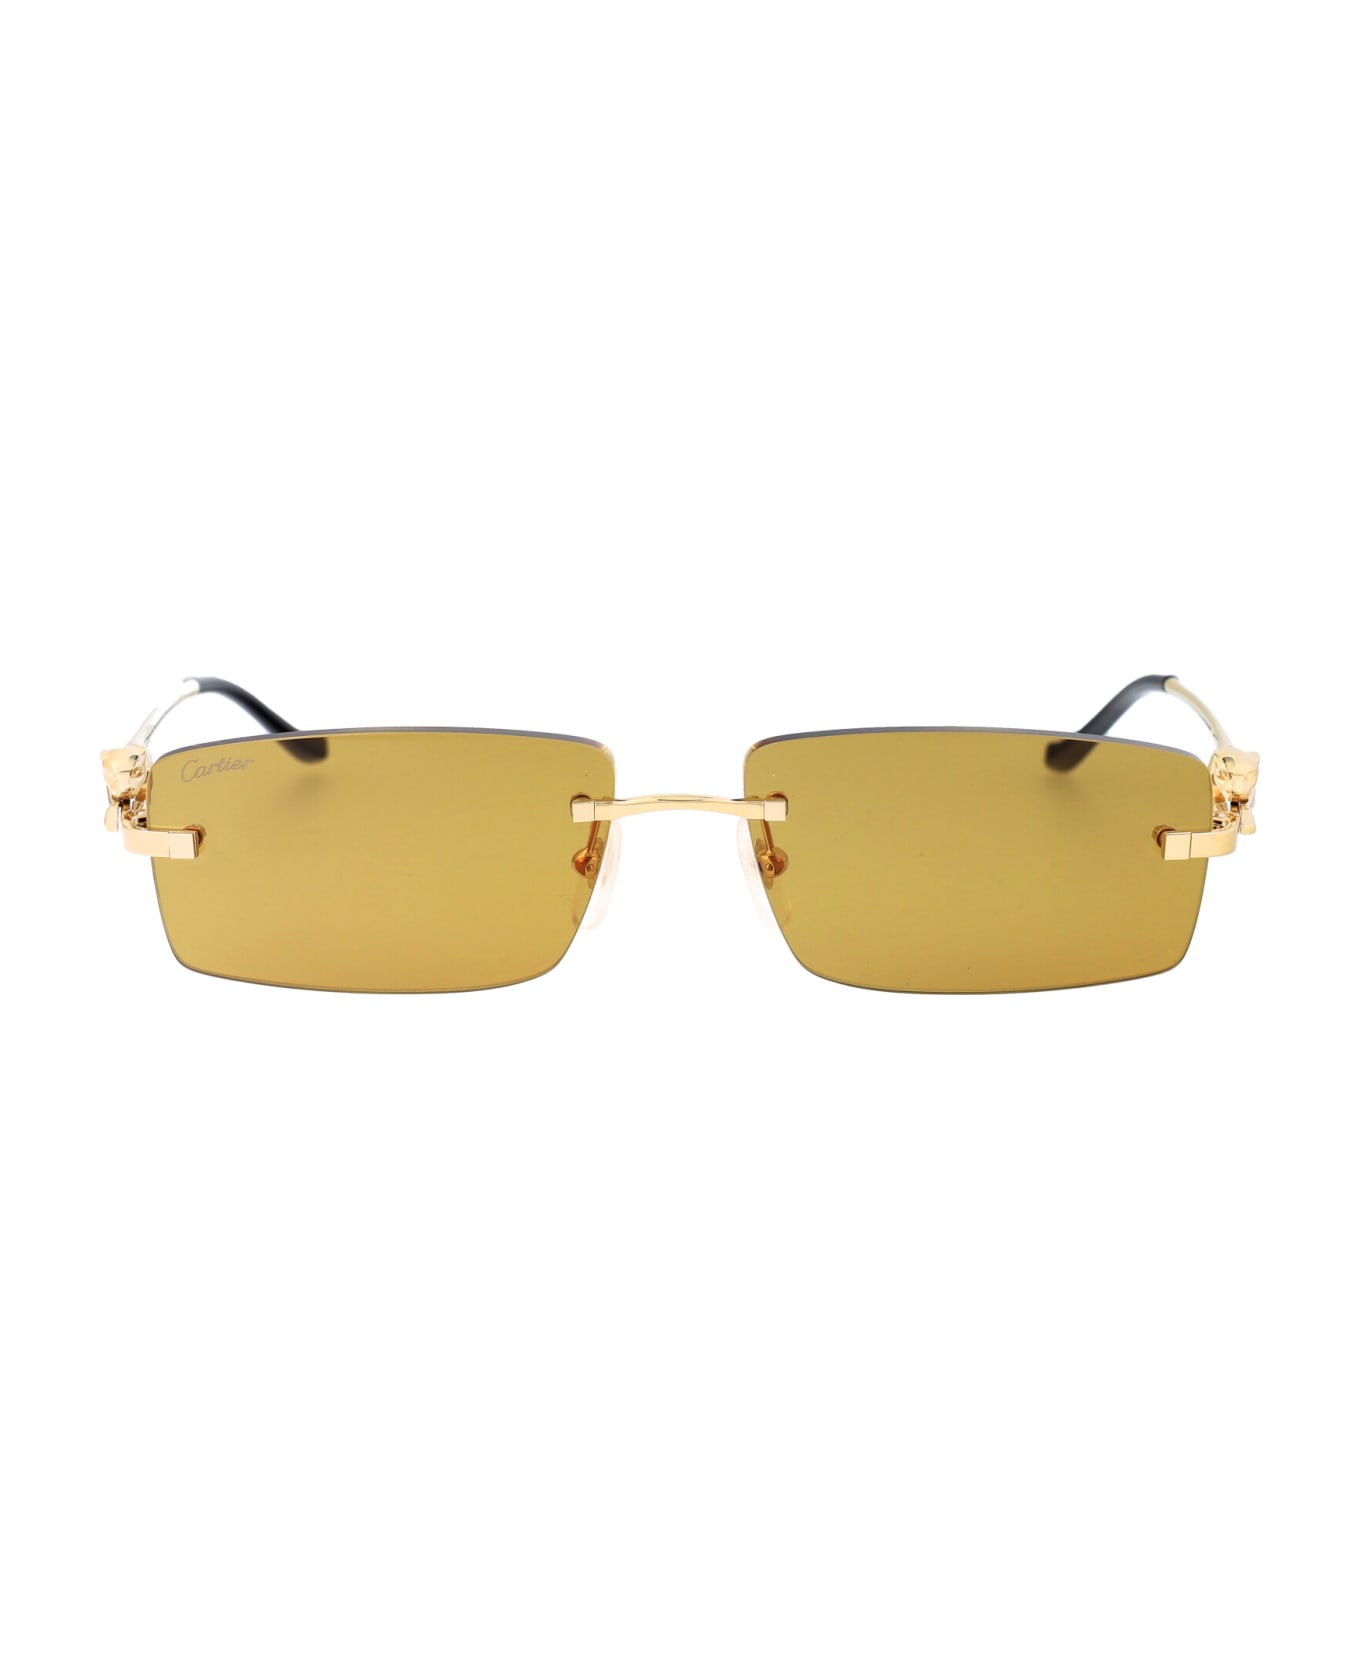 Cartier Eyewear Ct0430s Sunglasses - 003 GOLD GOLD YELLOW